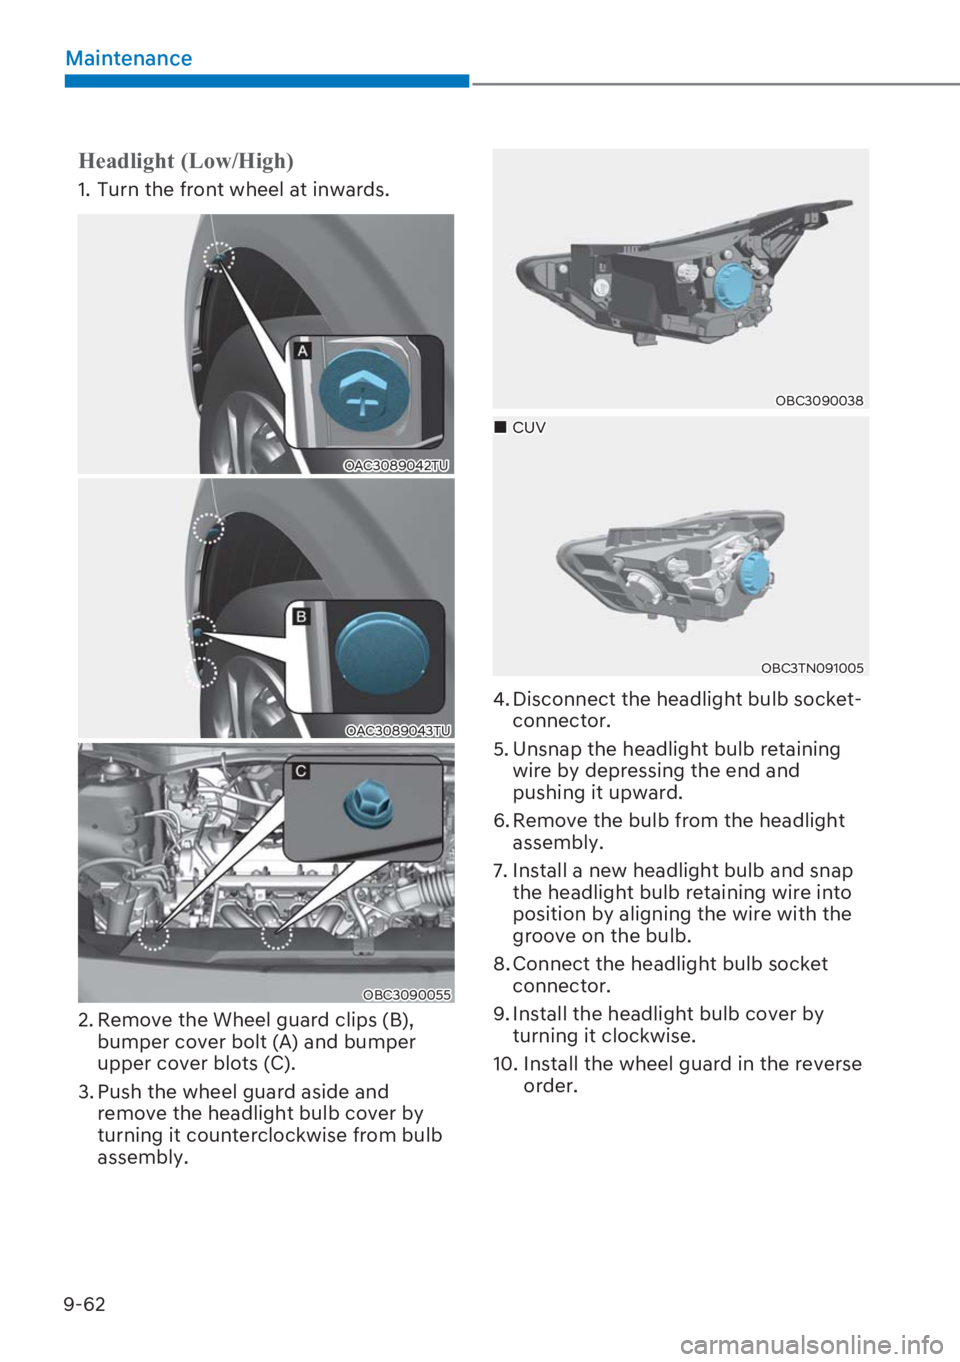 HYUNDAI I20 2023  Owners Manual 9-62
Maintenance
�+�H�D�G�O�L�J�K�W���/�R�Z��+�L�J�K�
1.  Turn the front wheel at inwards.
OAC3089042TU
OAC3089043TU
OBC3090055
2. Remove the Wheel guard clips (B), 
bumper cover bolt (A) and bump